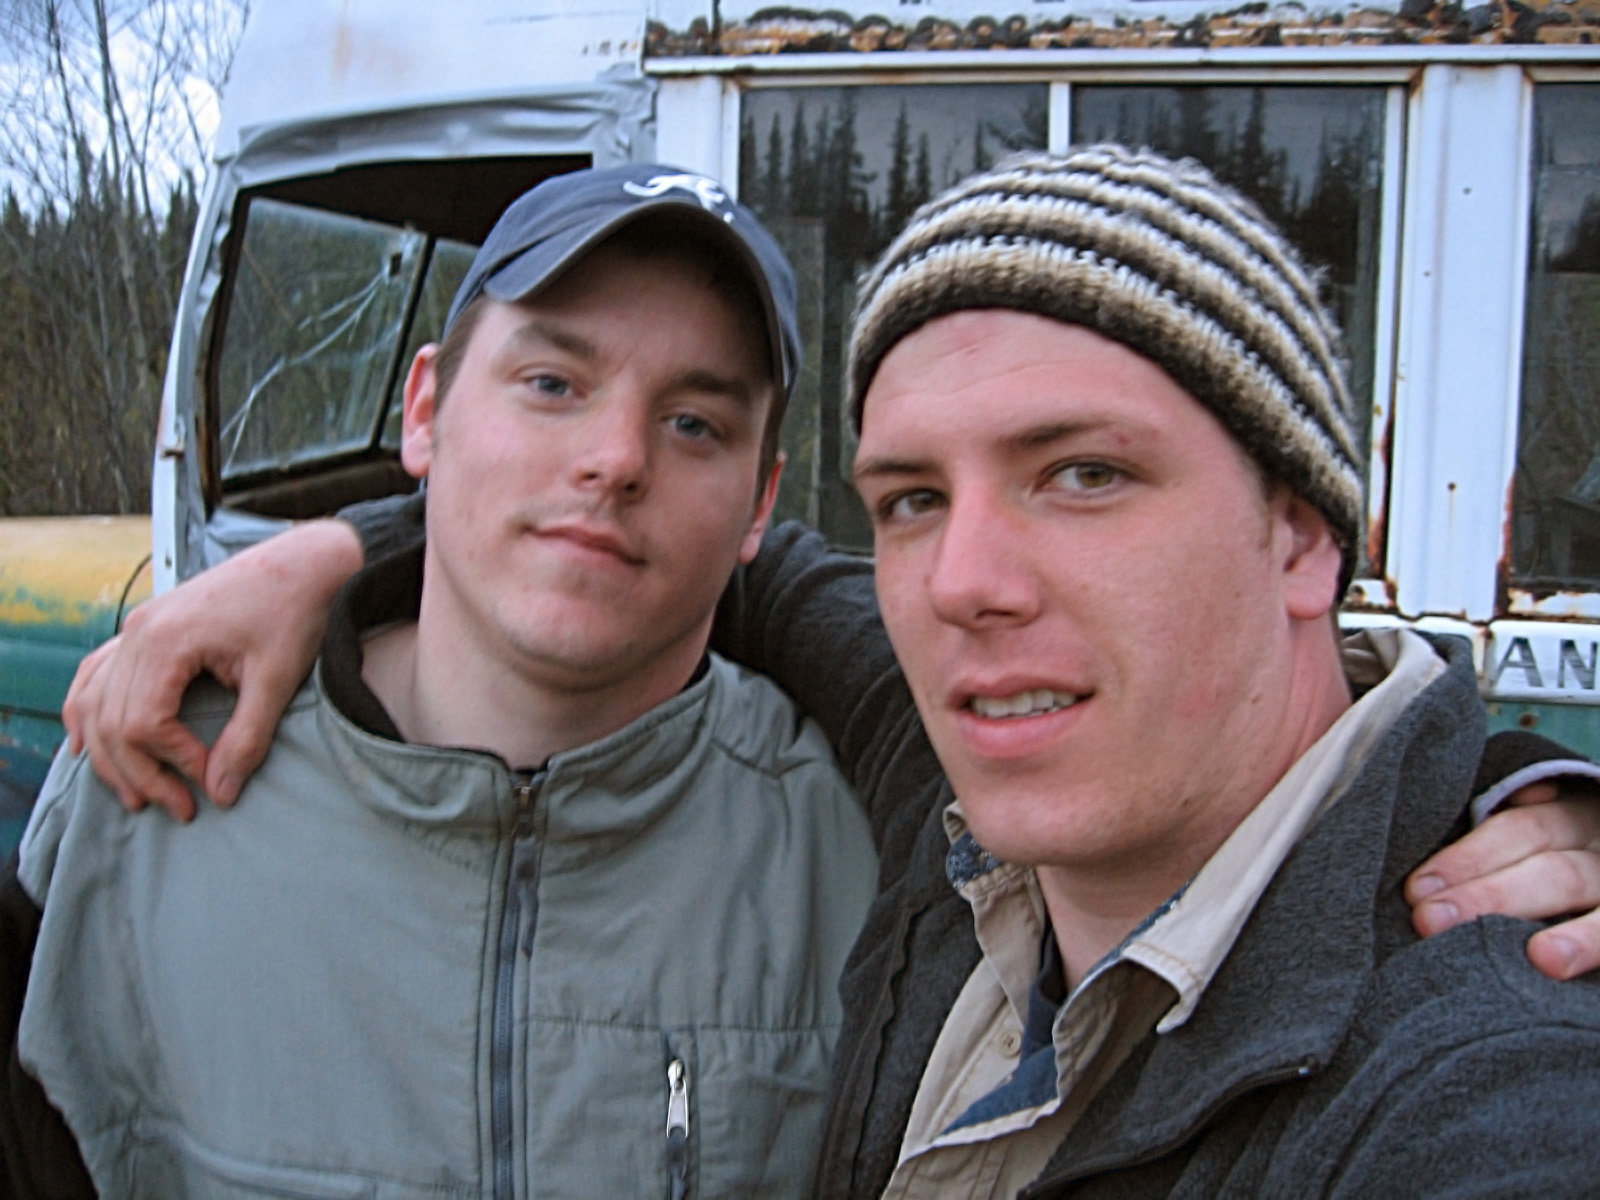 Shane Redman & Sean Mulcrone at Bus 142 on May 8 2008